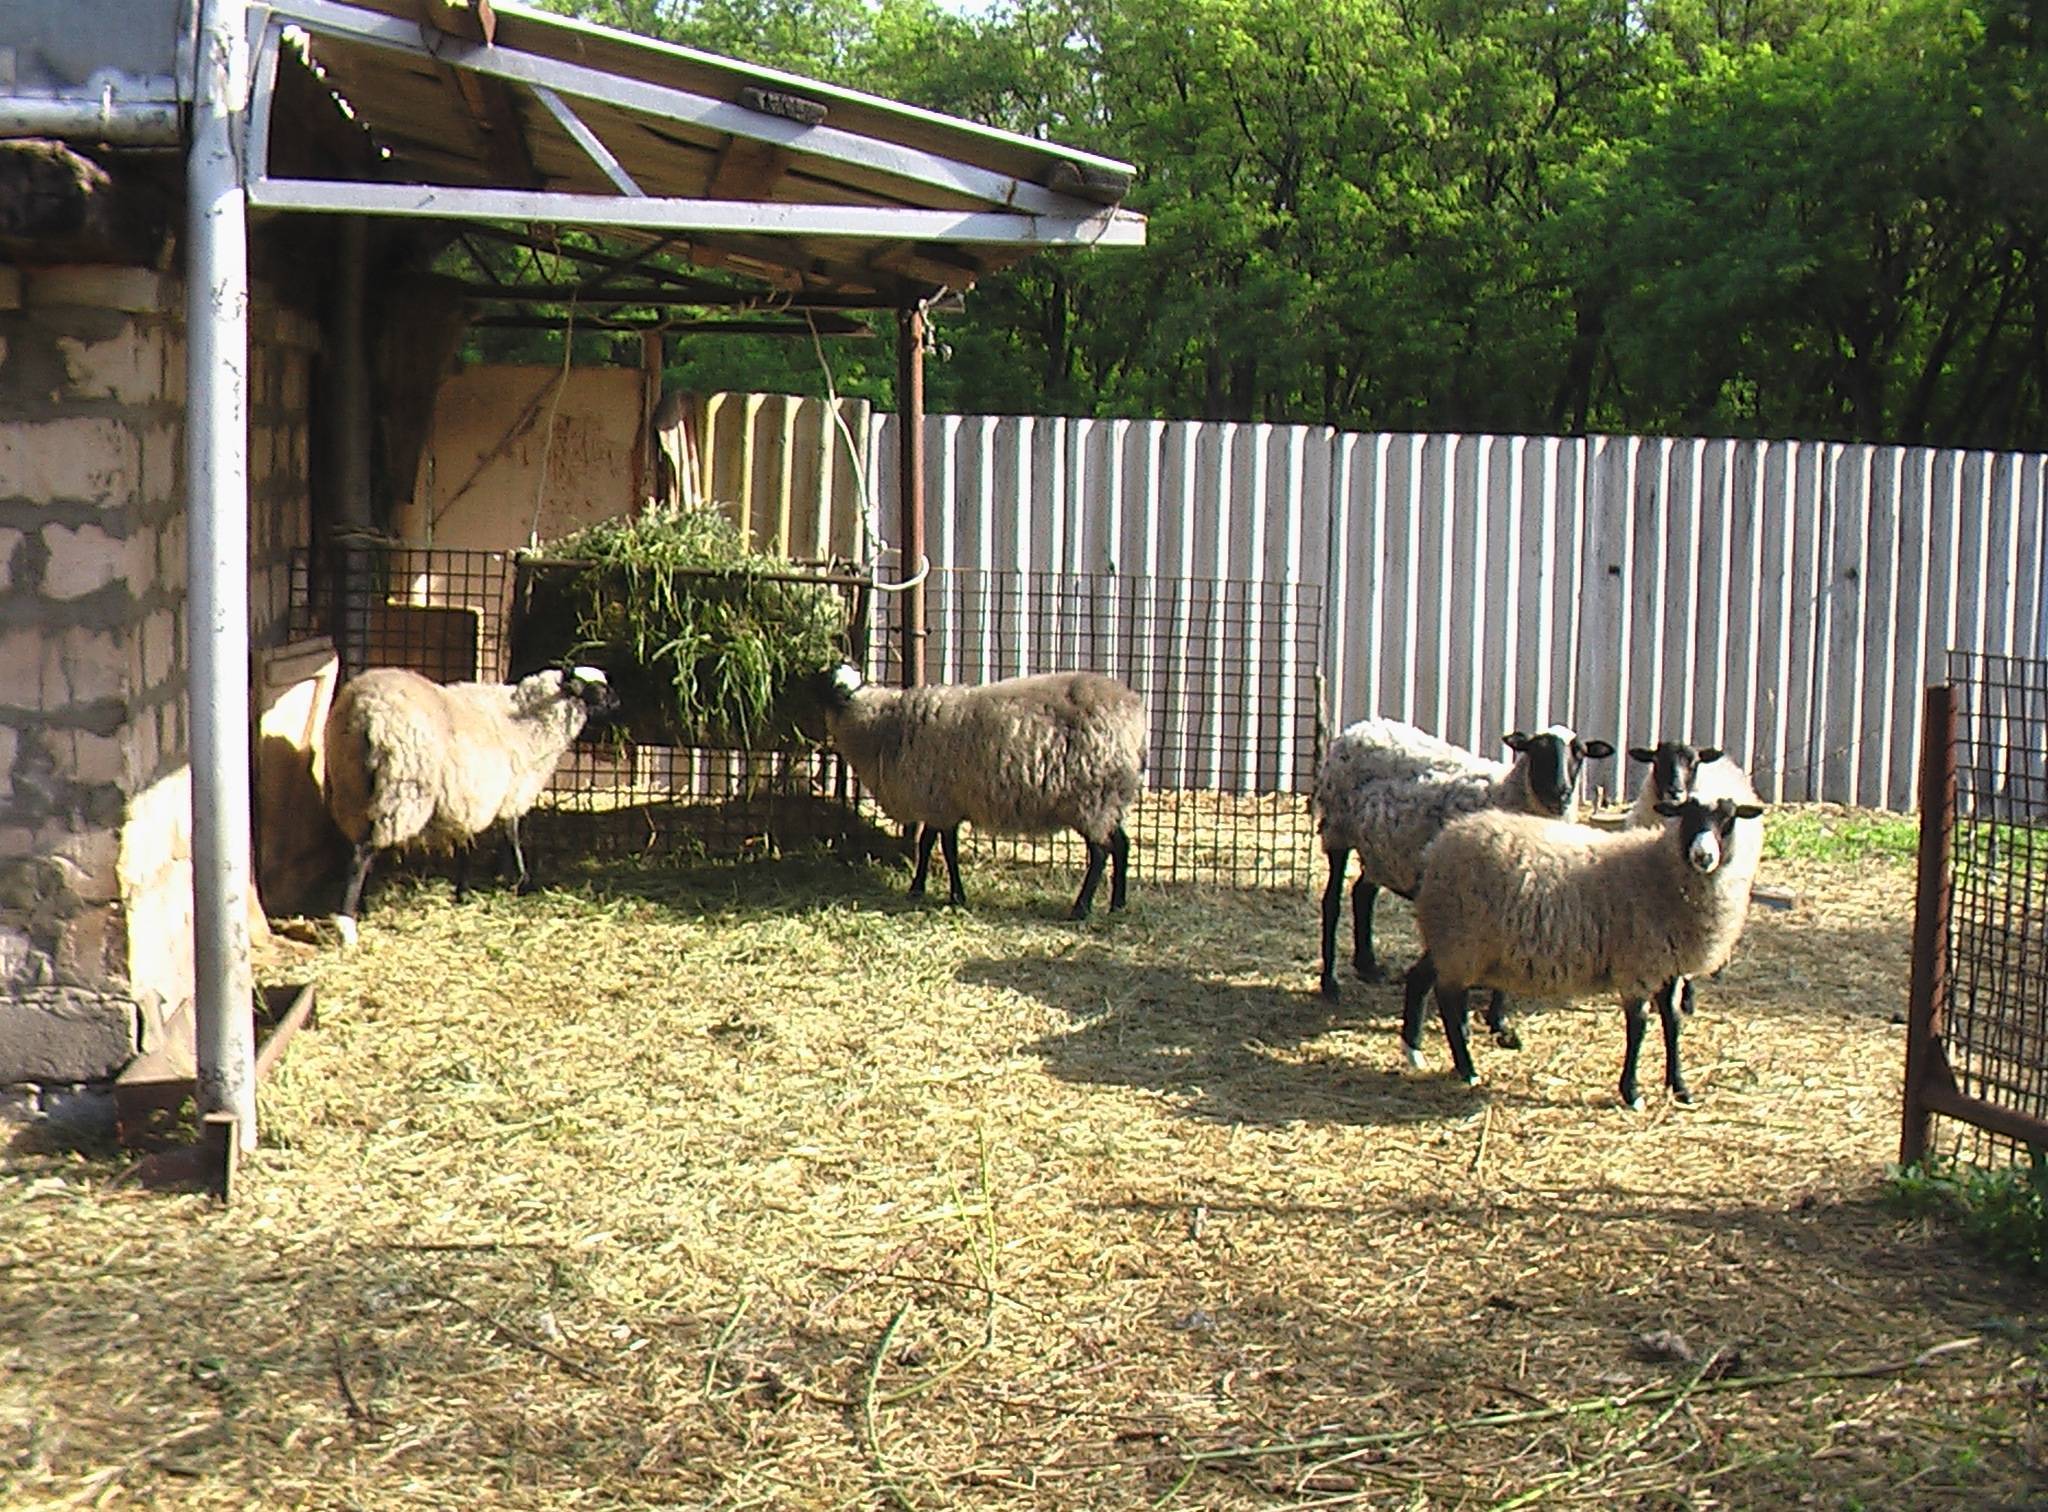 Разведение овец на мясо в домашних условиях для начинающих